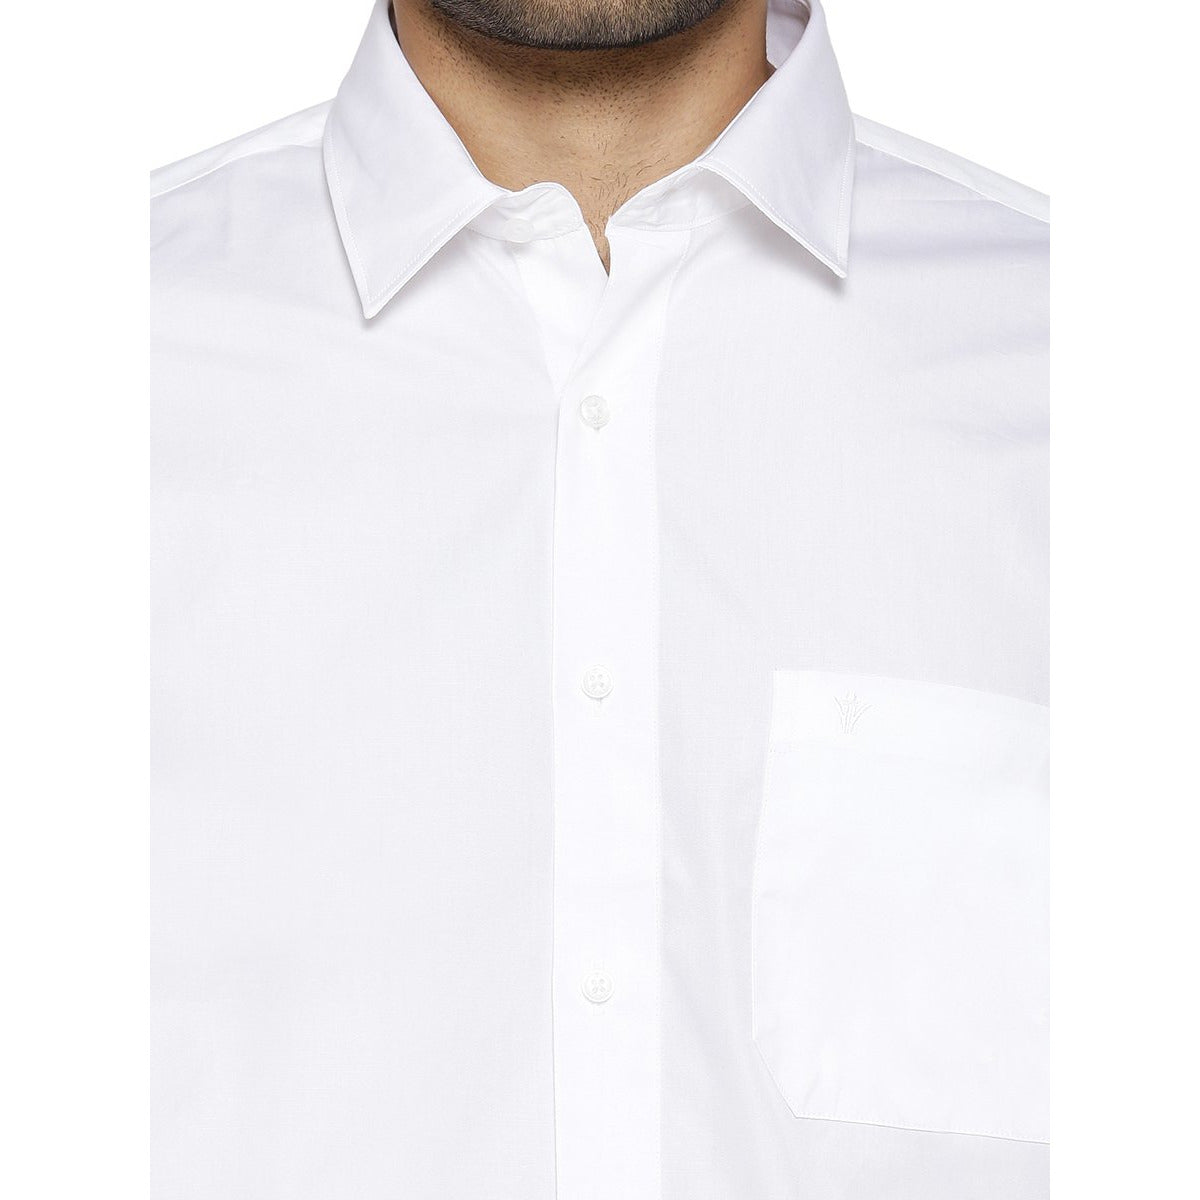 Mens Cotton White Shirt Half Sleeves Plus Size Royal Cotton-Zoom view